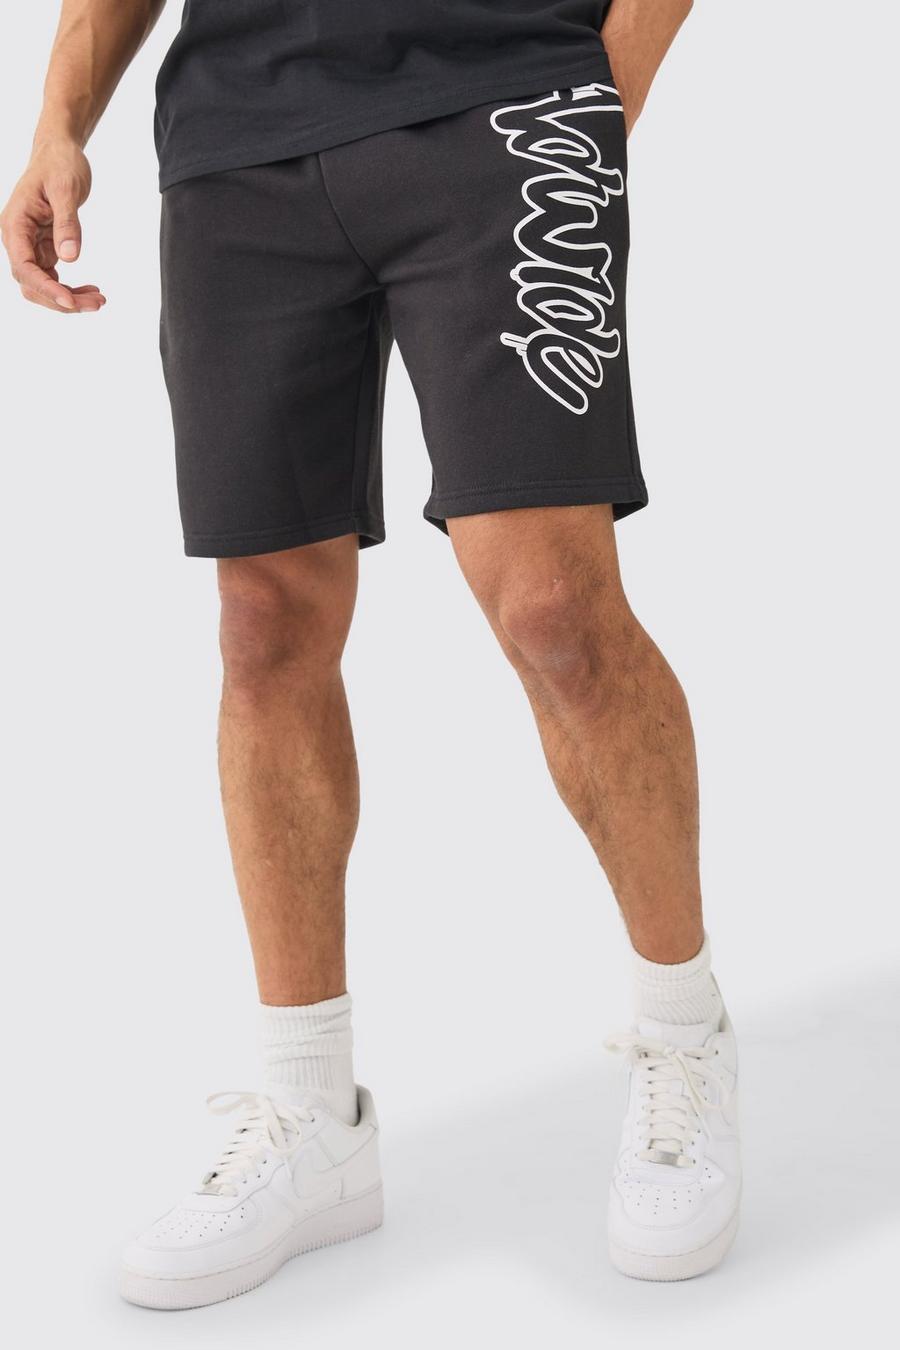 Lockere Shorts mit Worldwide-Print, Black